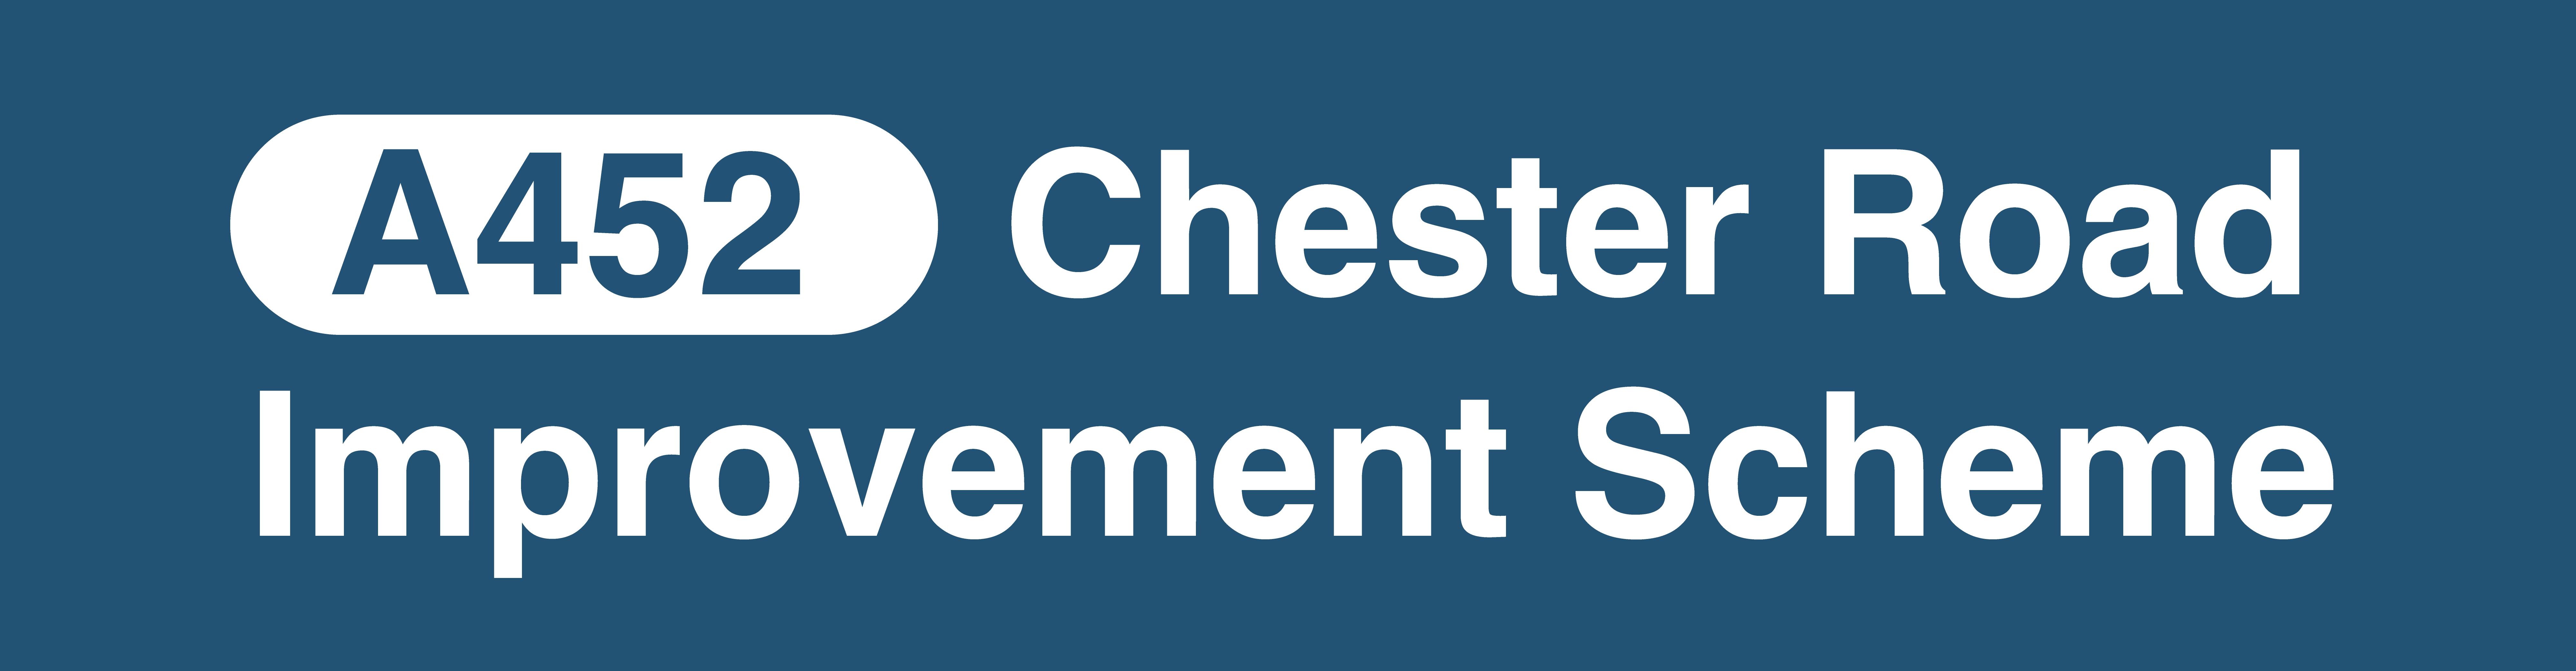 A452 Chester Road Improvement Scheme